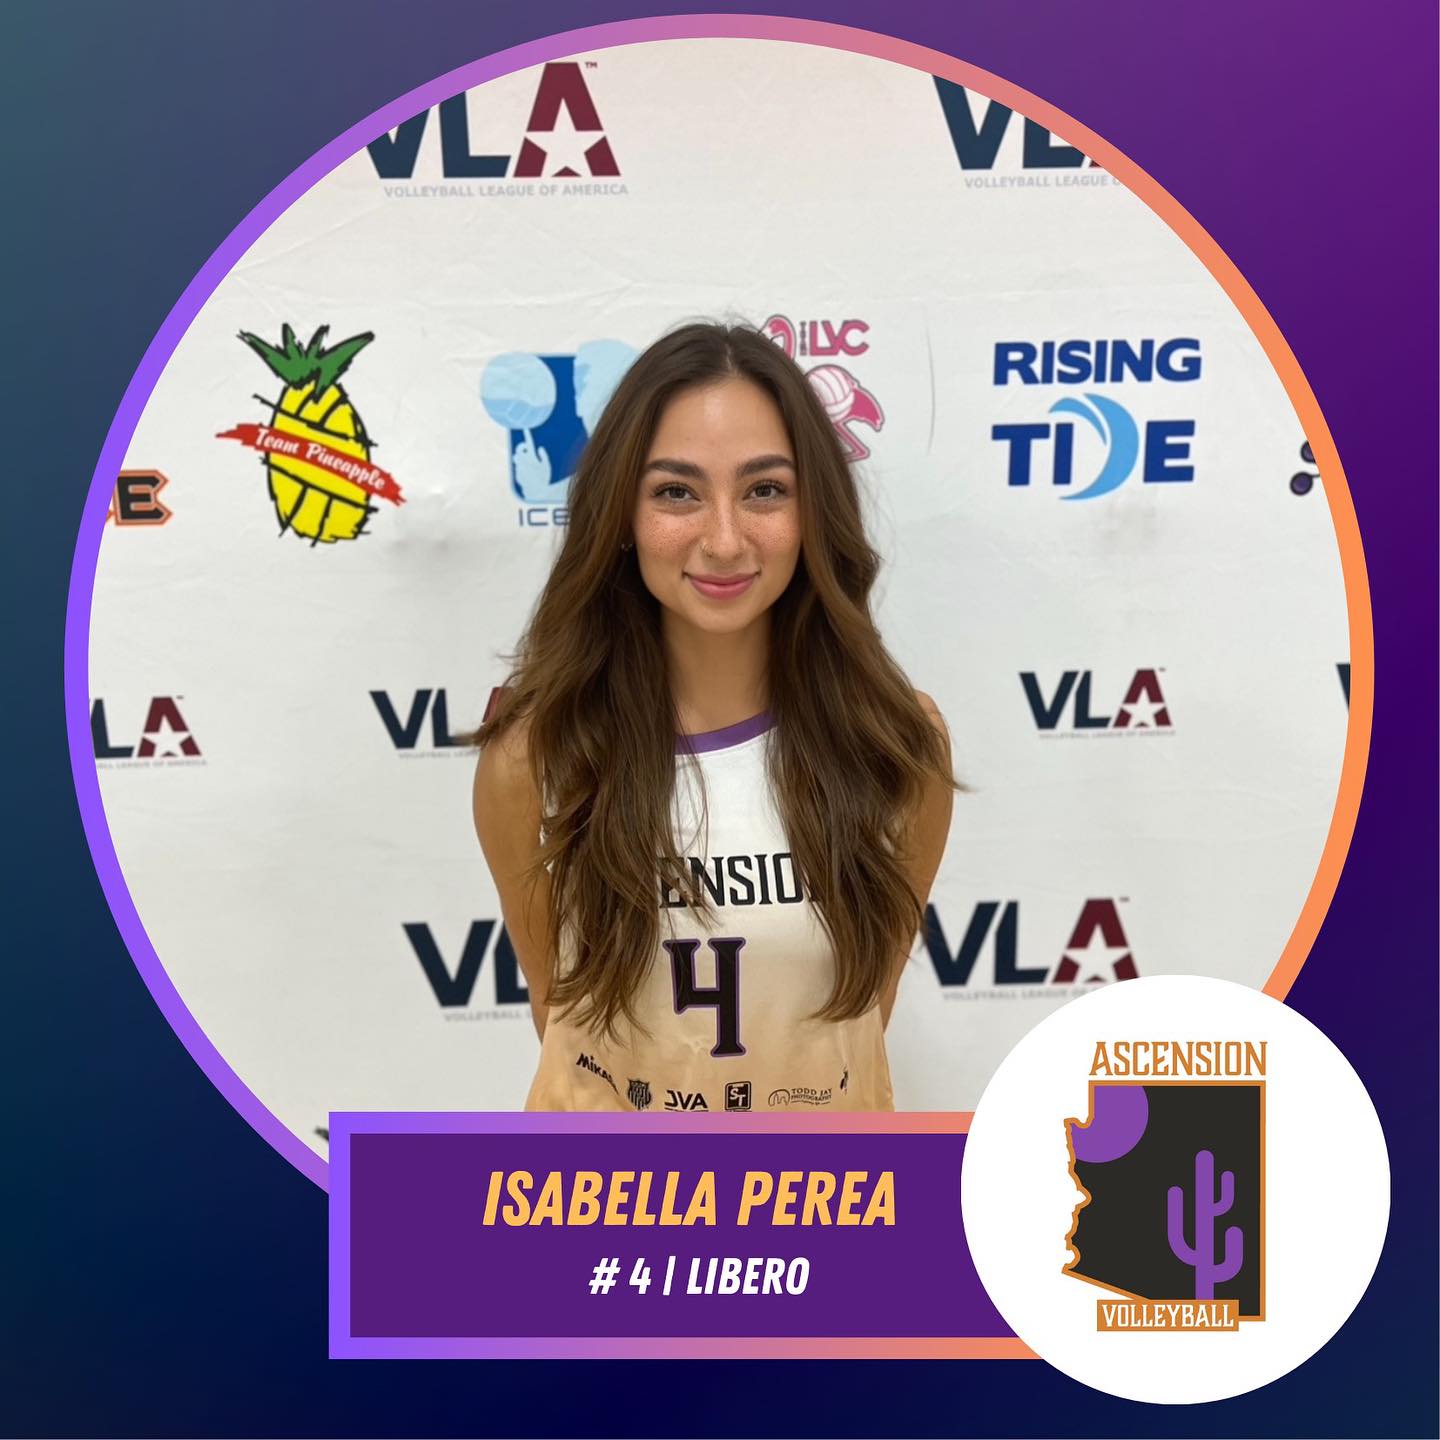 Isabella Perea - #4 - Libero